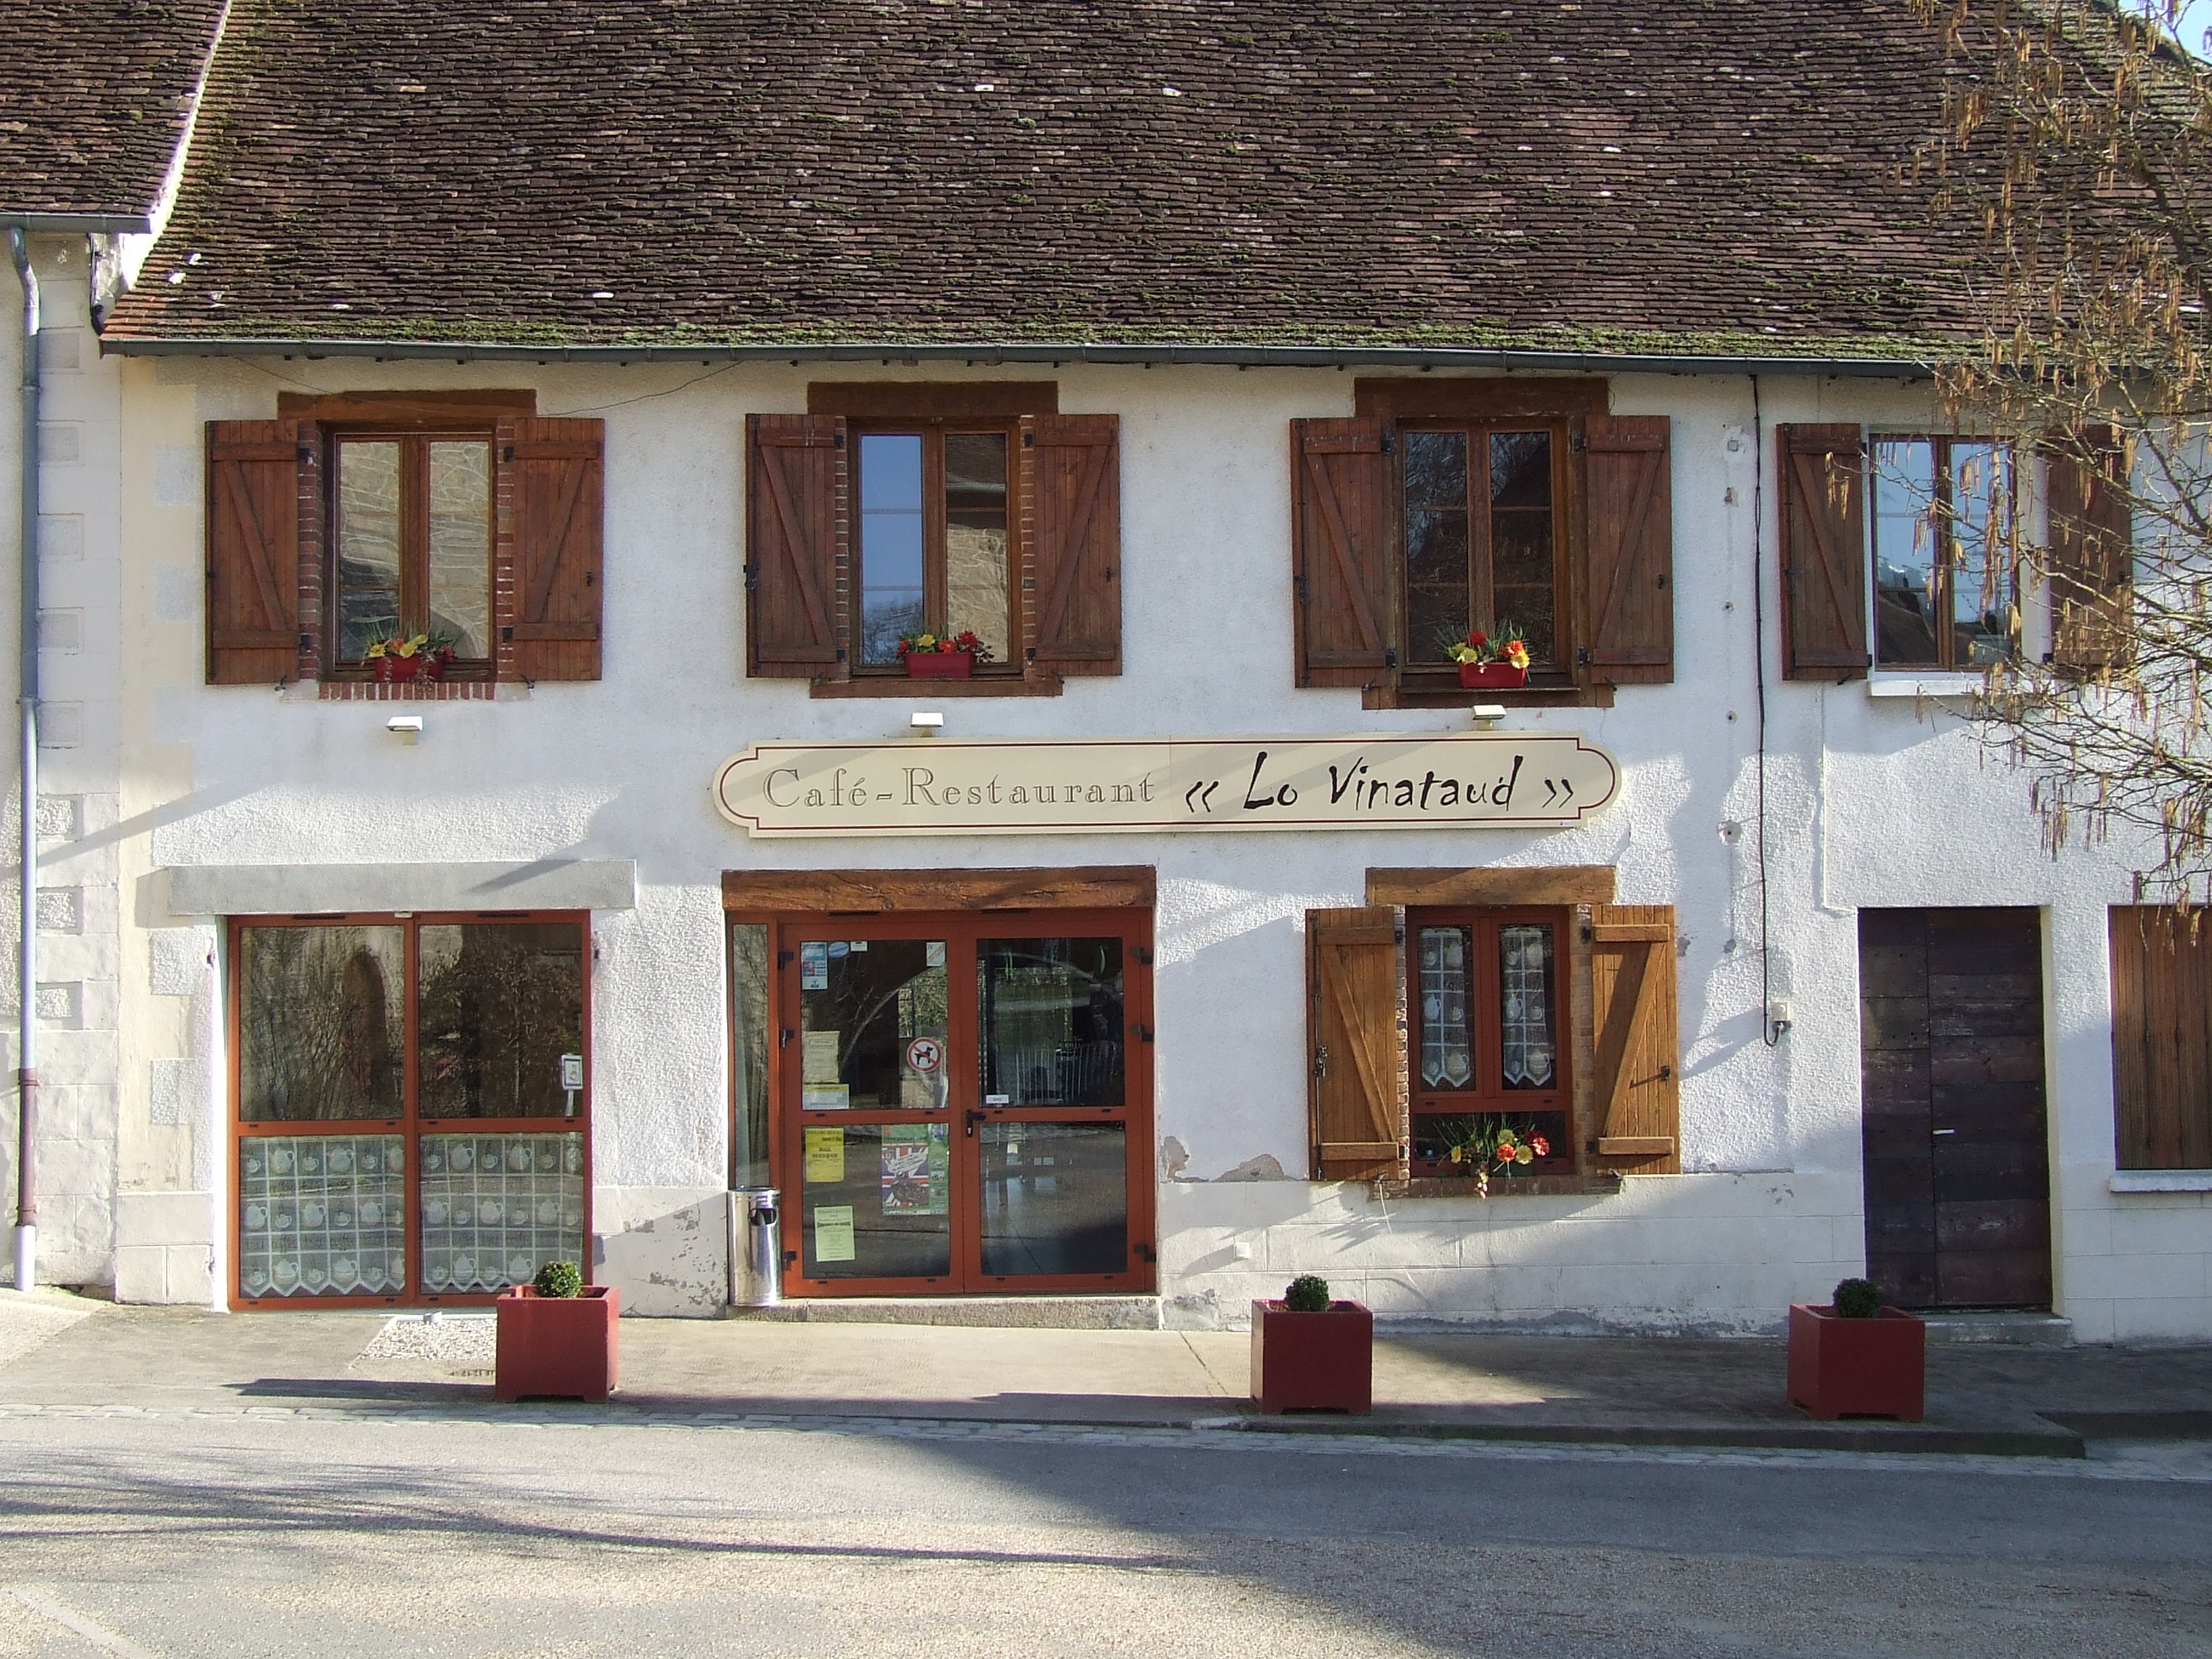 Restaurant et café "Lo Vinataud" null France null null null null